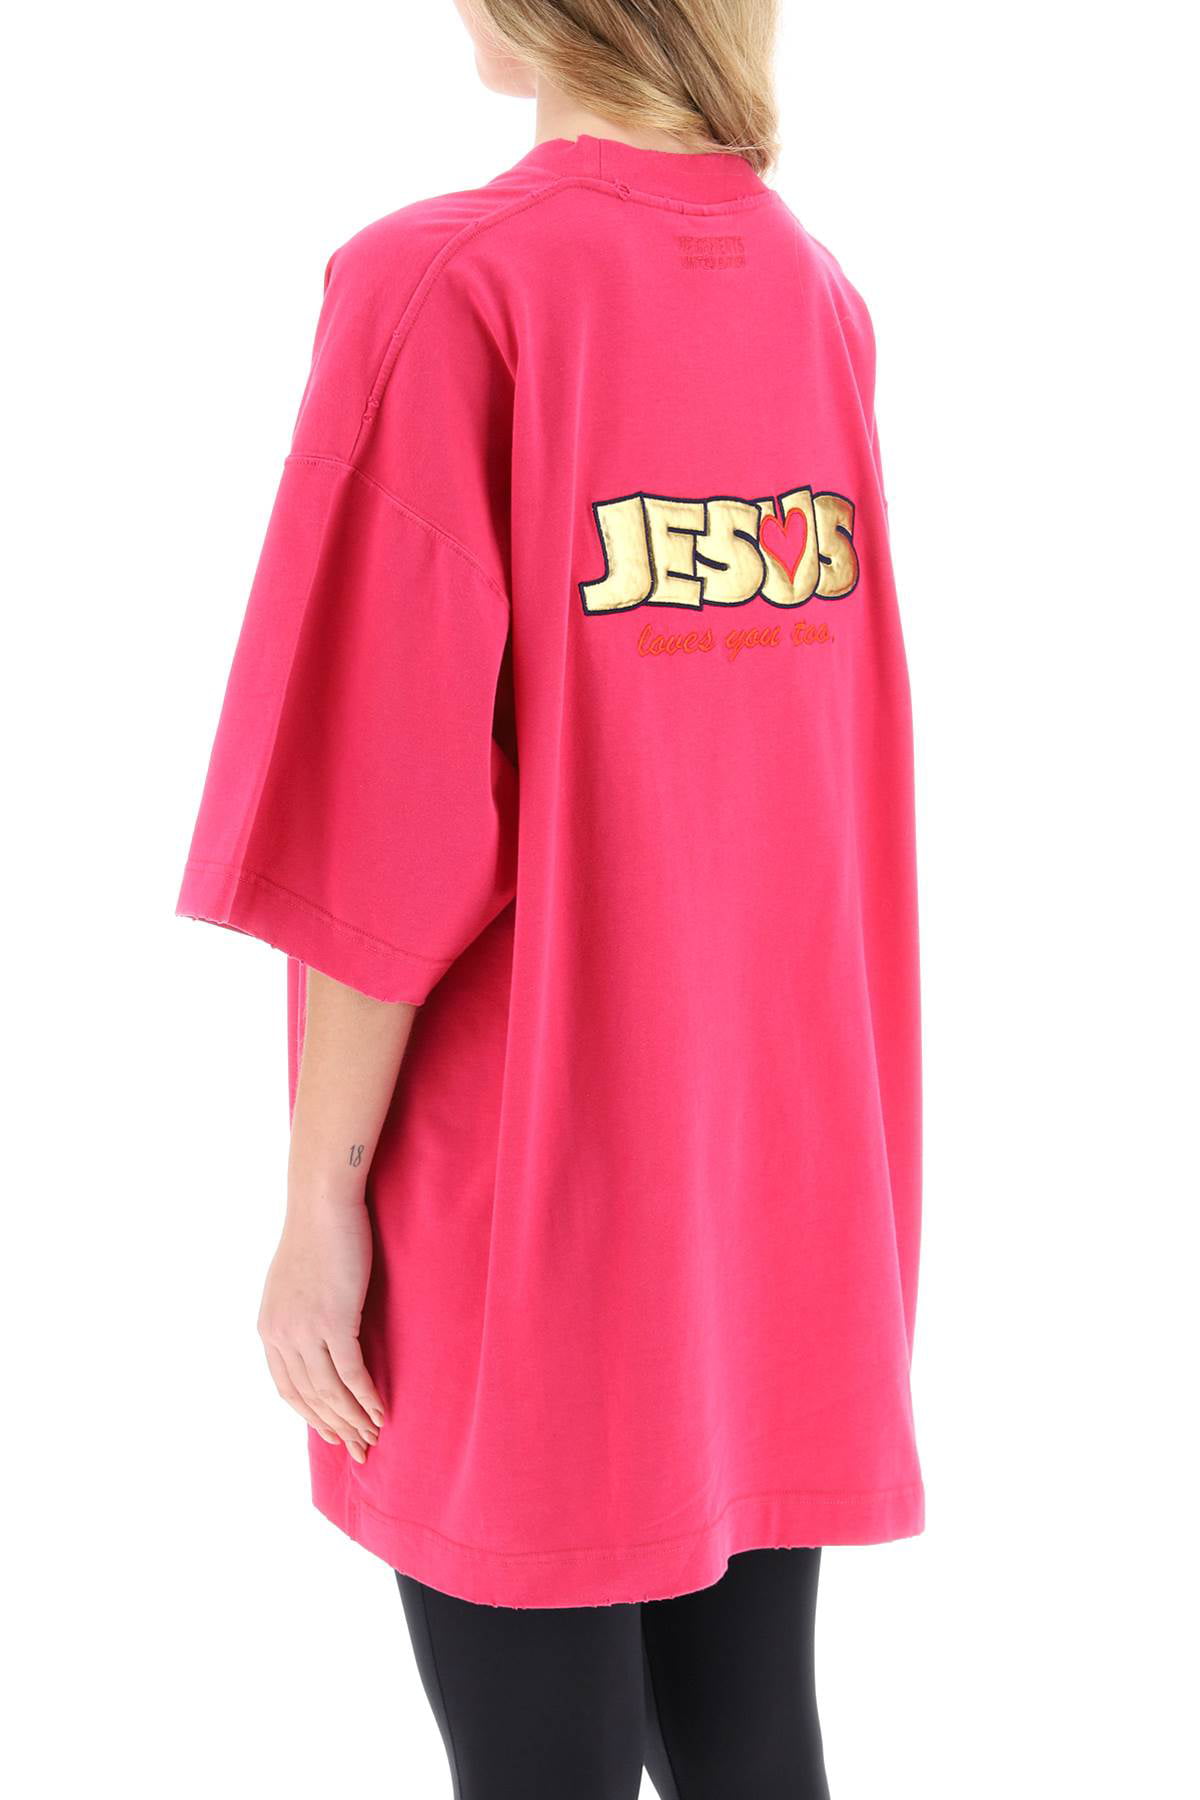 Vetements 'jesus loves you' oversized t-shirt - Walmart.com